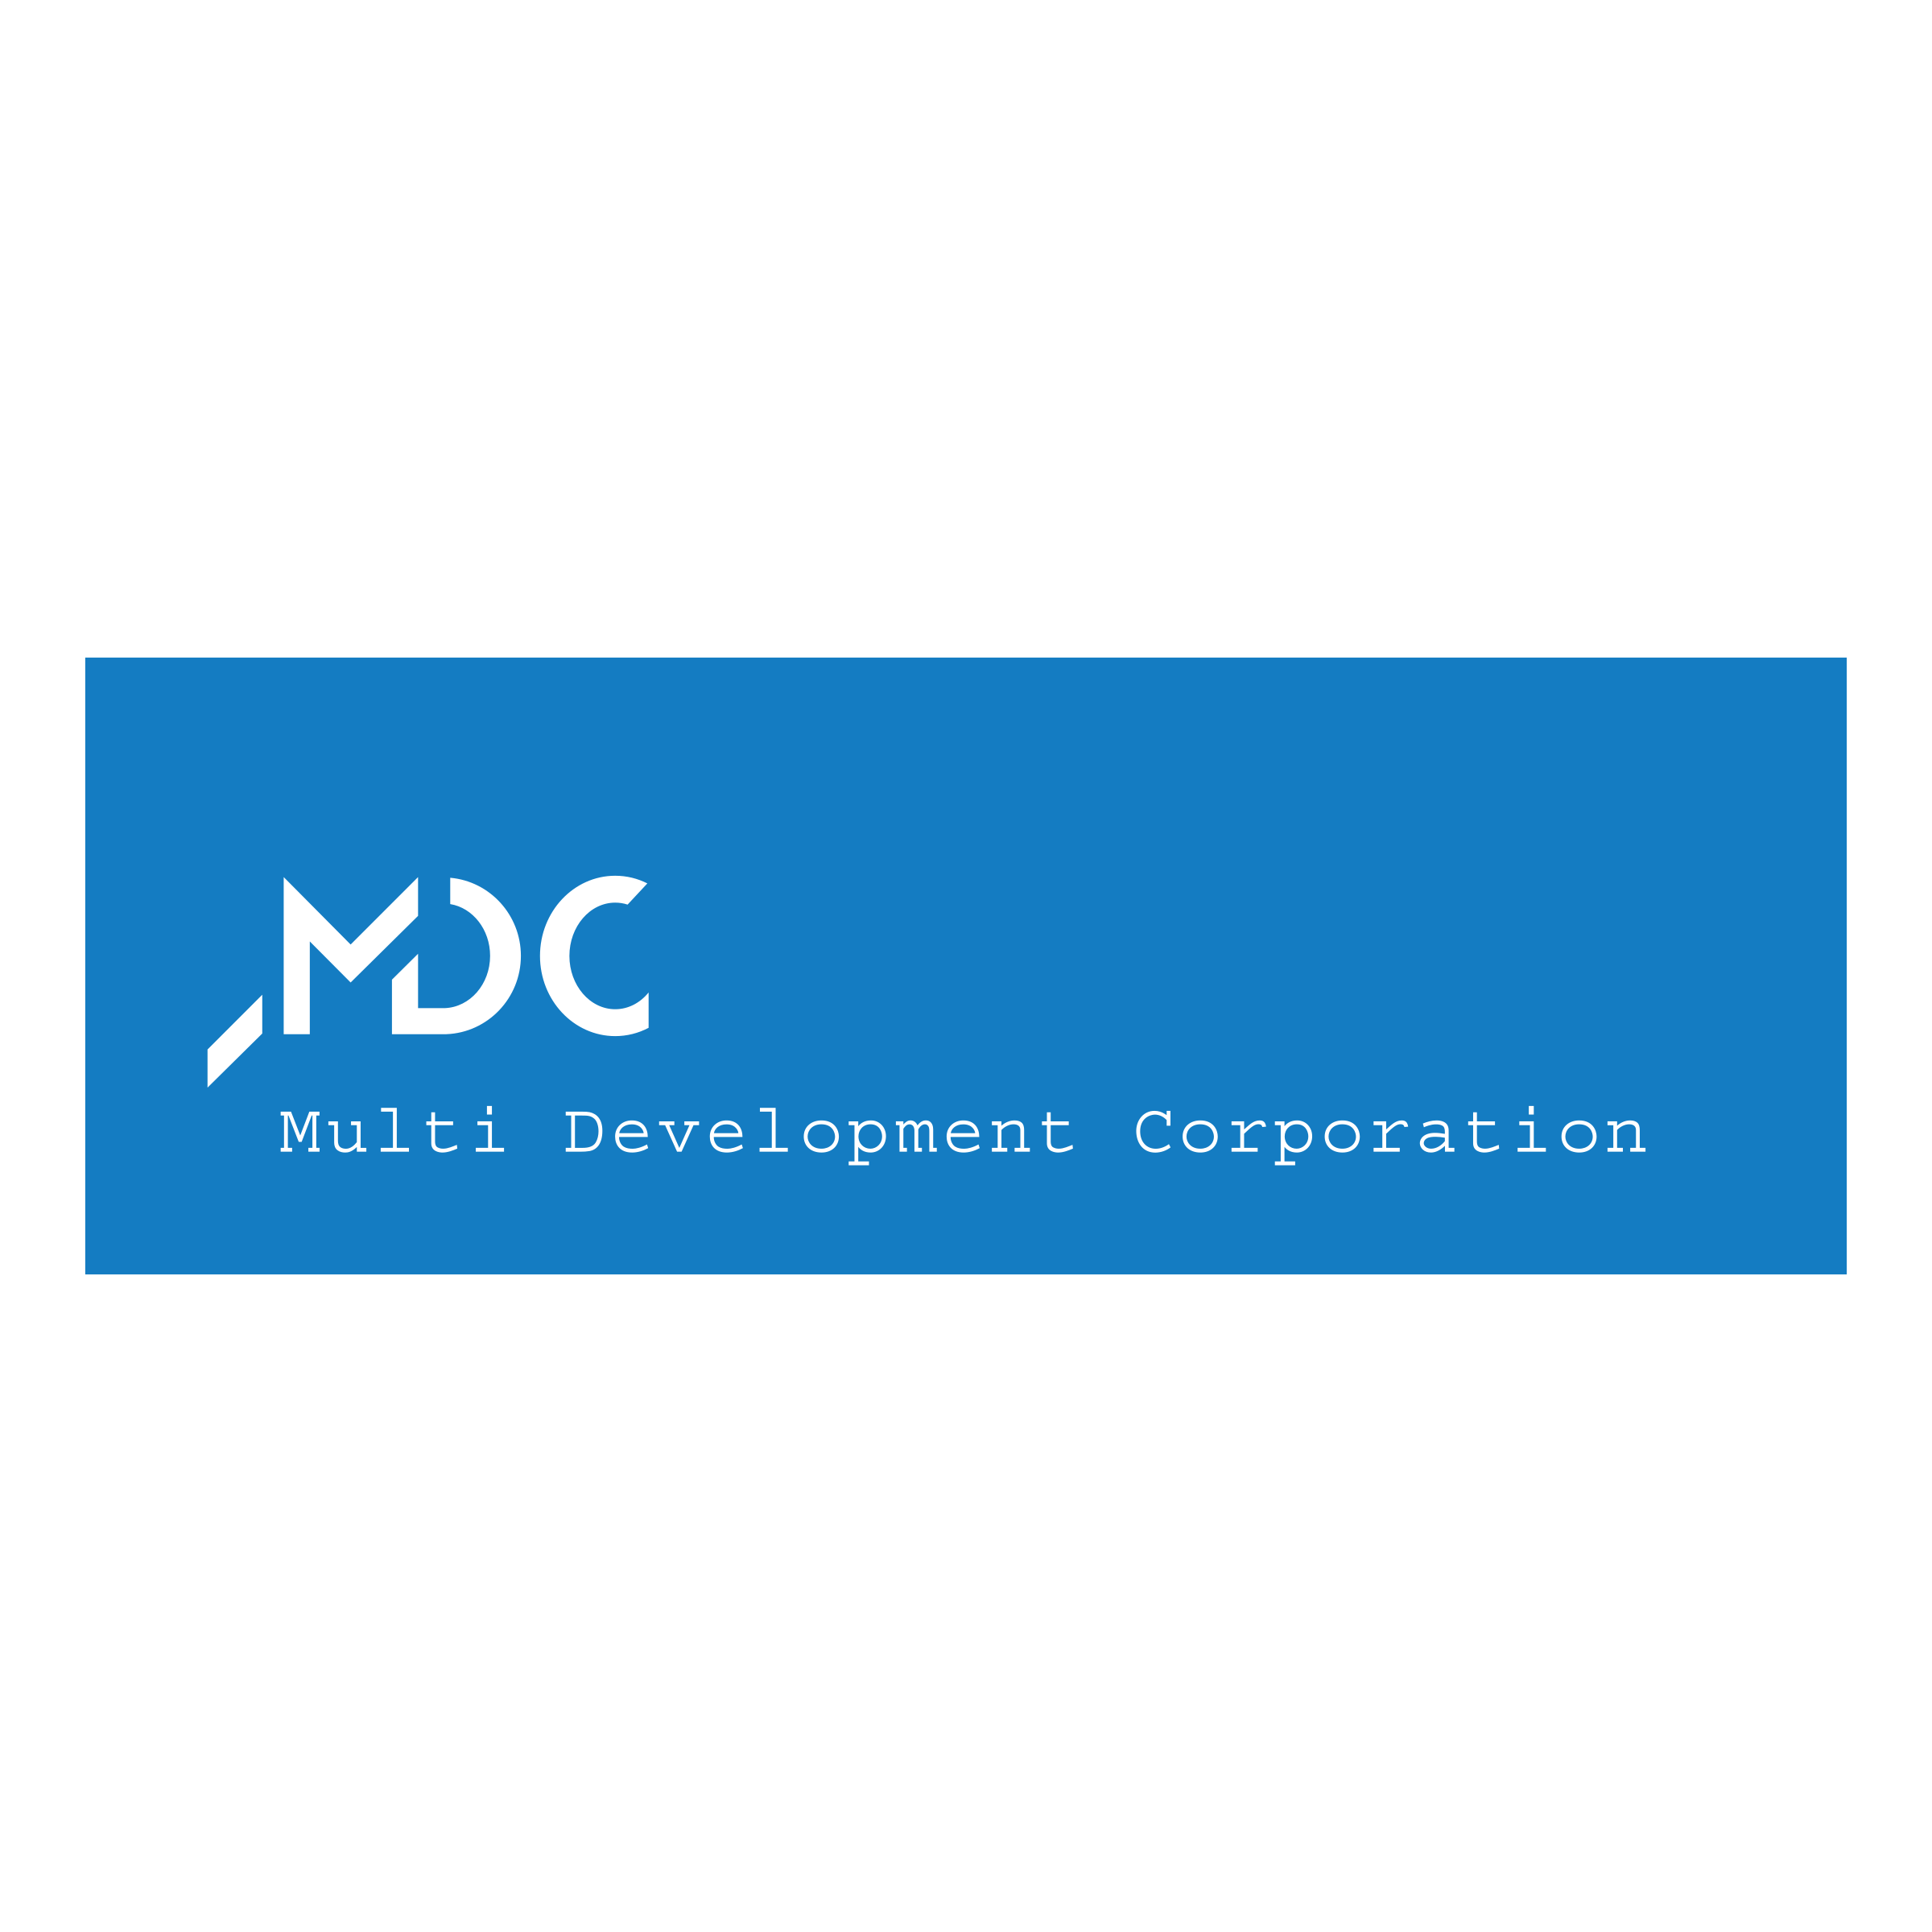 MDC Logo - MDC Logo PNG Transparent & SVG Vector - Freebie Supply